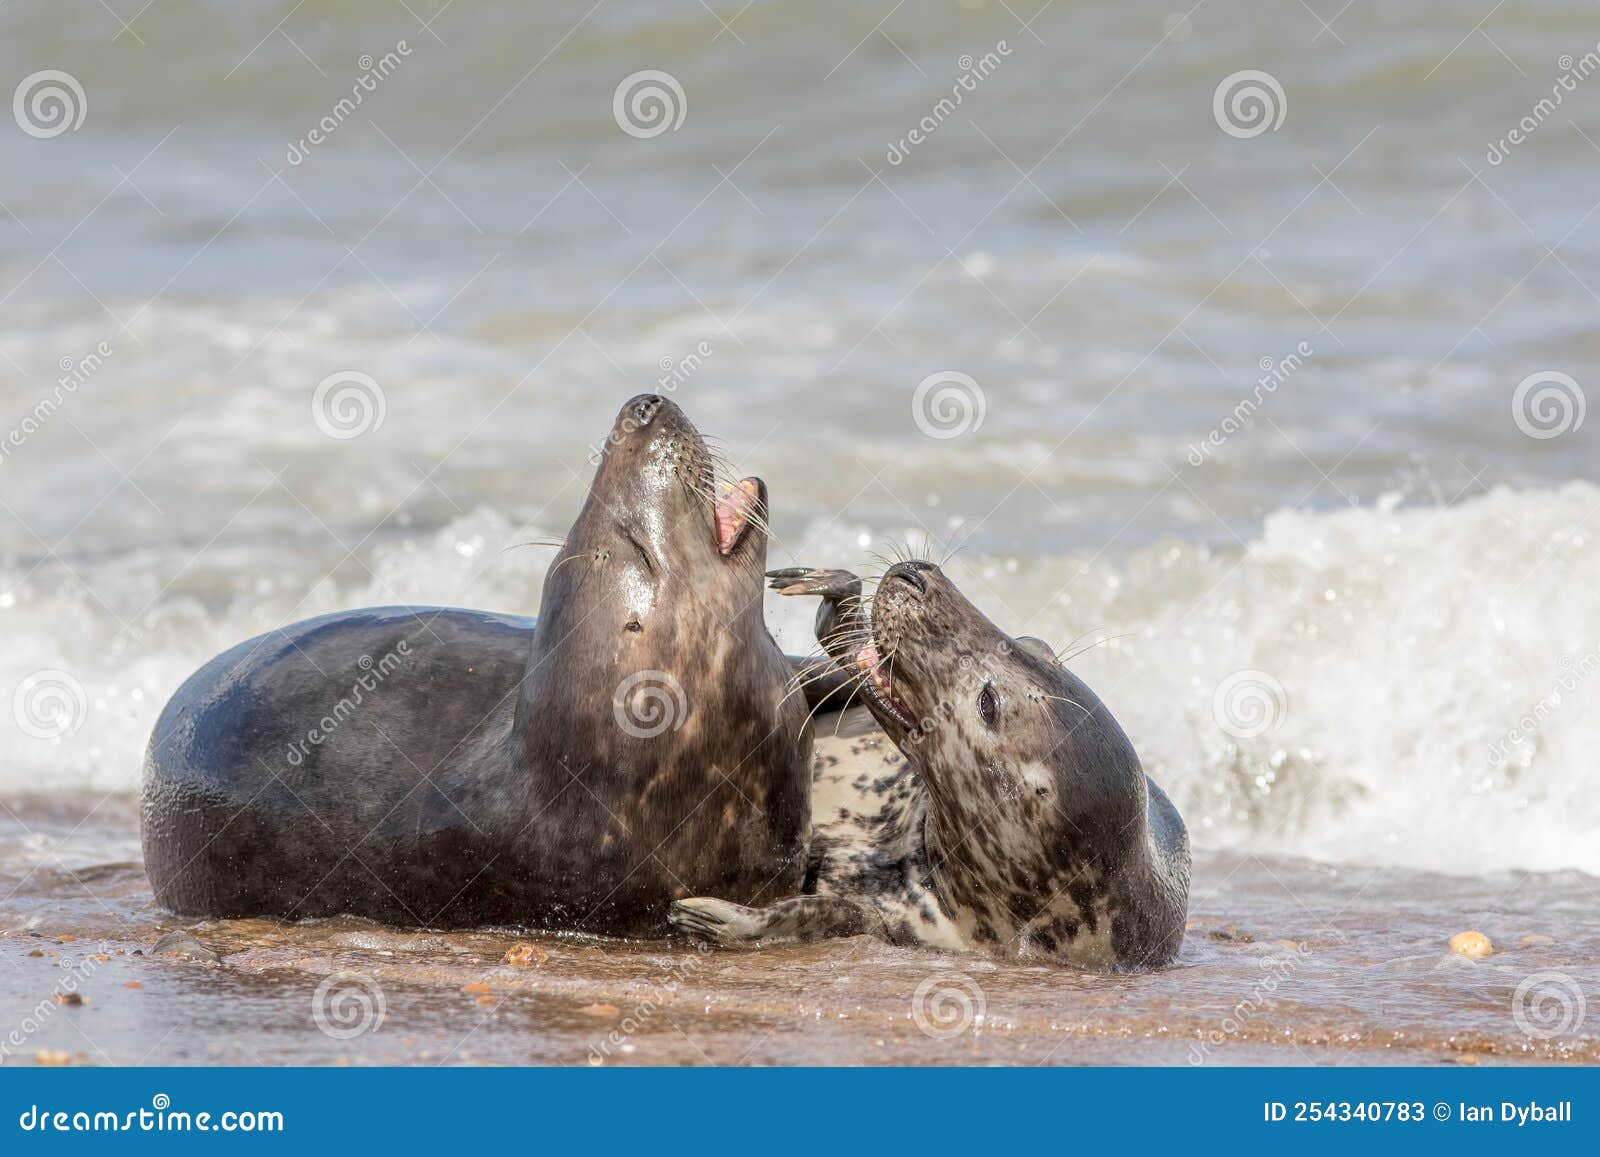 Grey Seals Mating. Wild Animals Having Fun. Intimate Wildlife Close-up  Stock Image - Image of banter, forever: 254340783